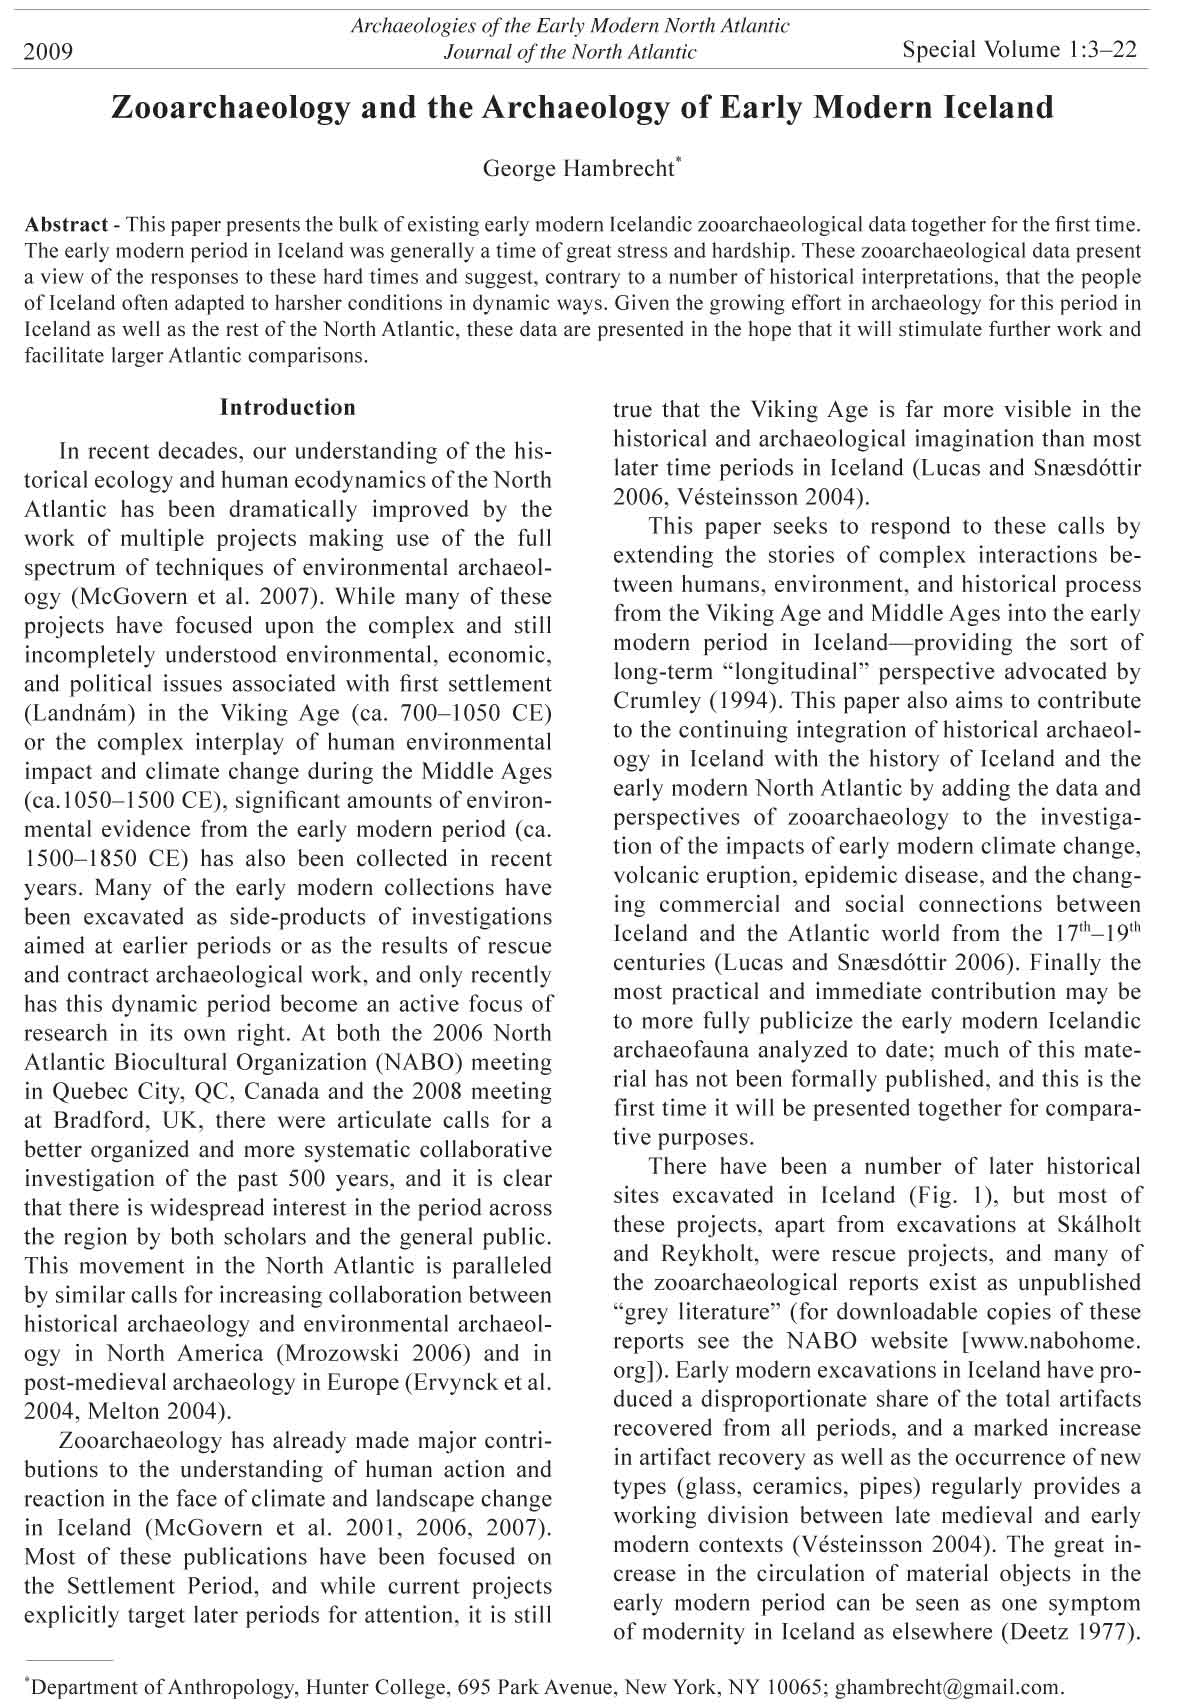 JONA Vol. 1 abstract page